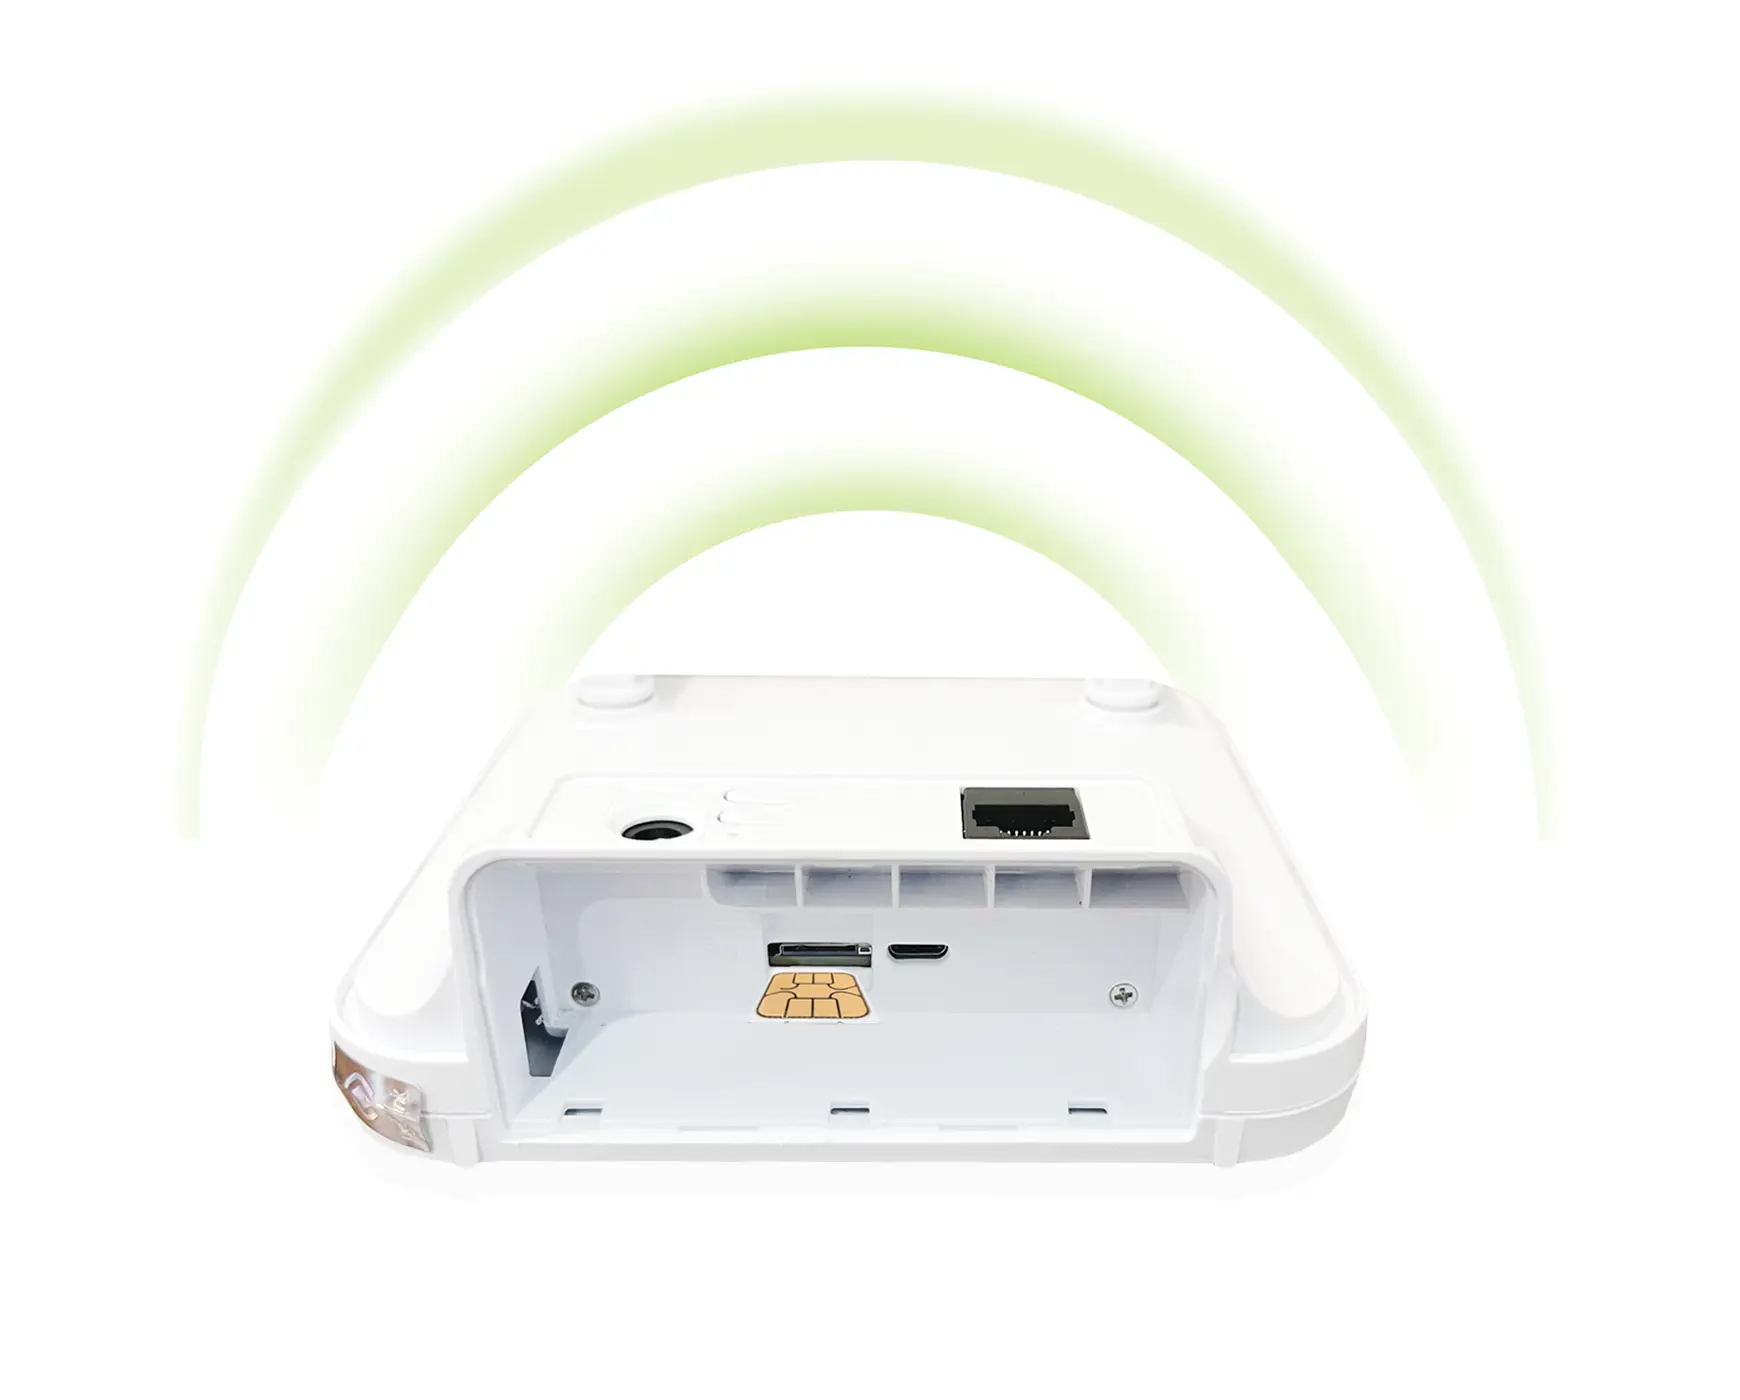 ugalink-LTE-modem-plug-and-play-simcard